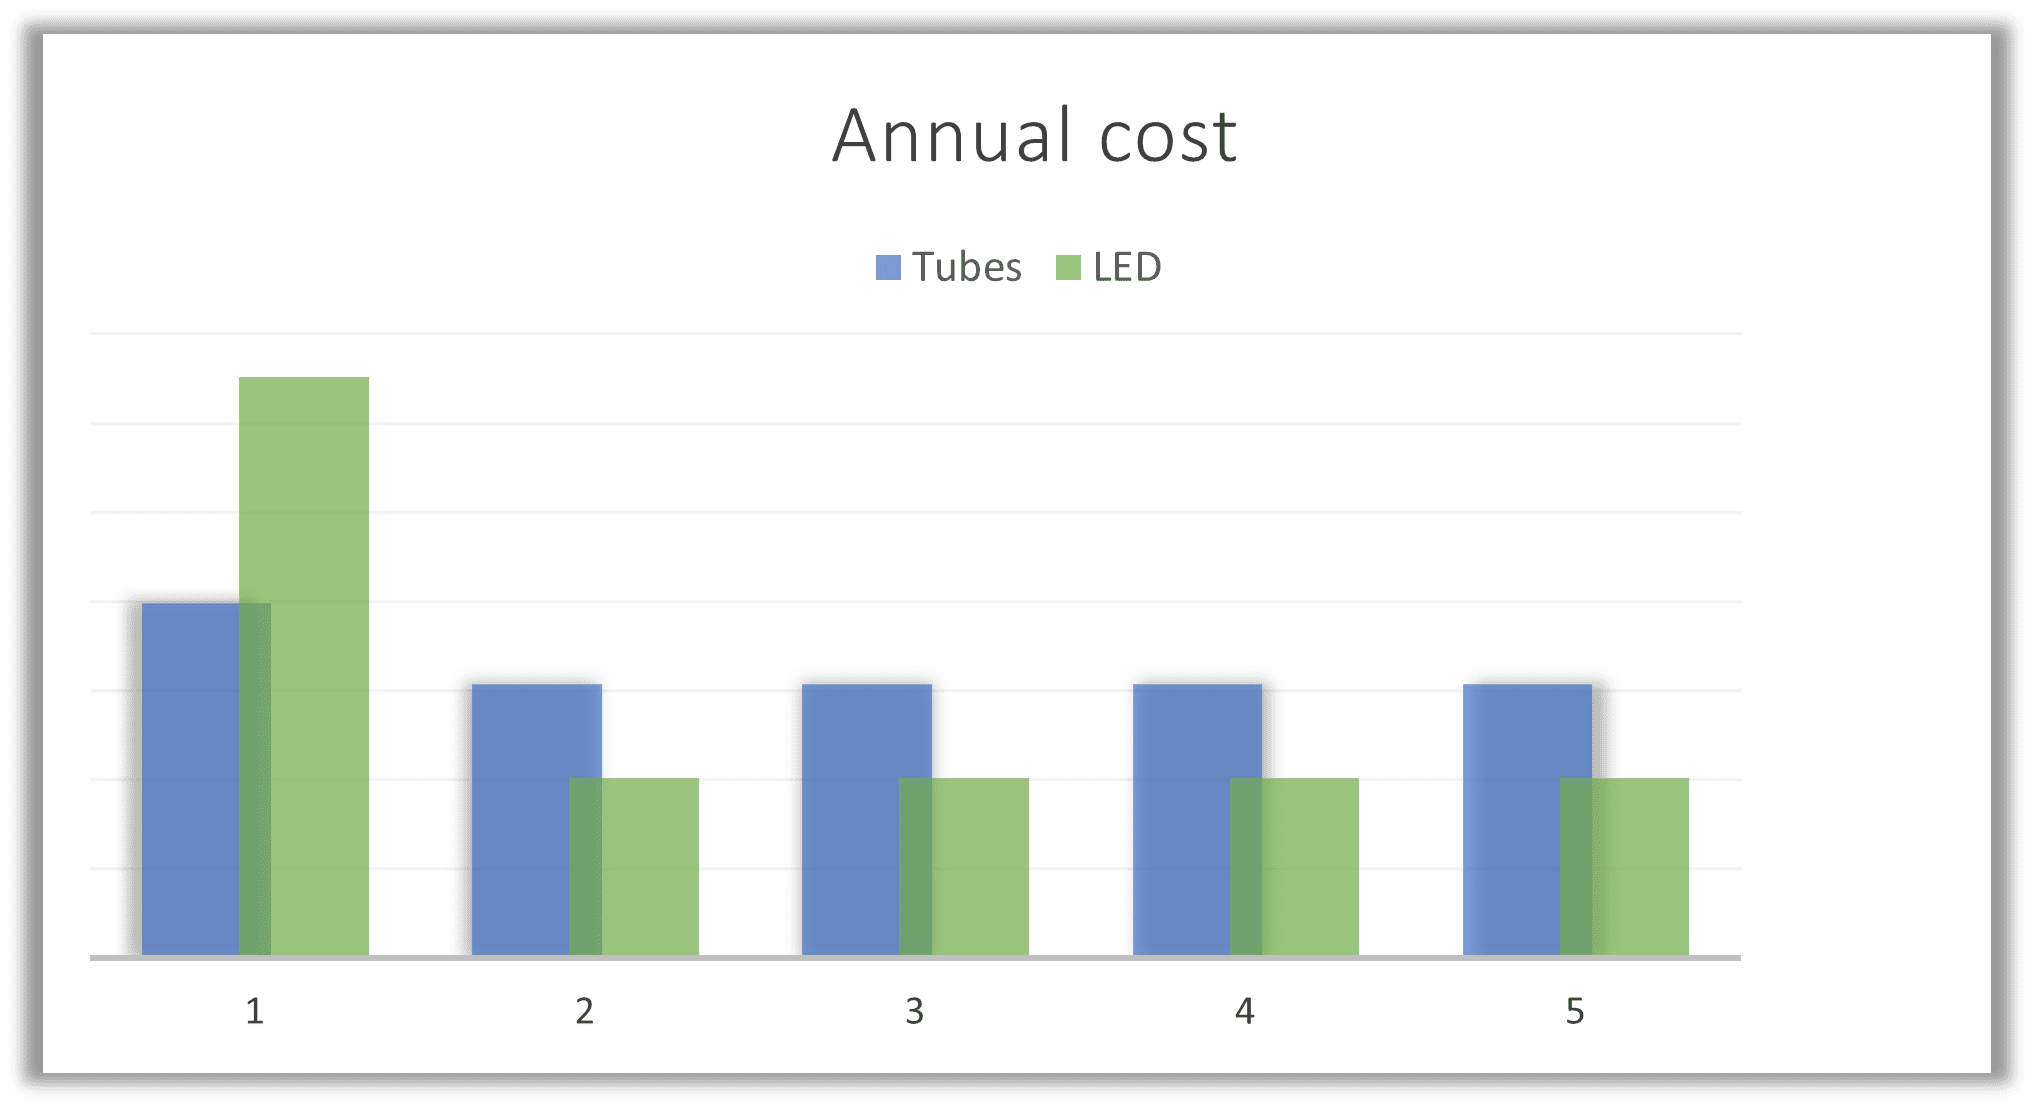 LED advertising site retrofit, annual cost savings